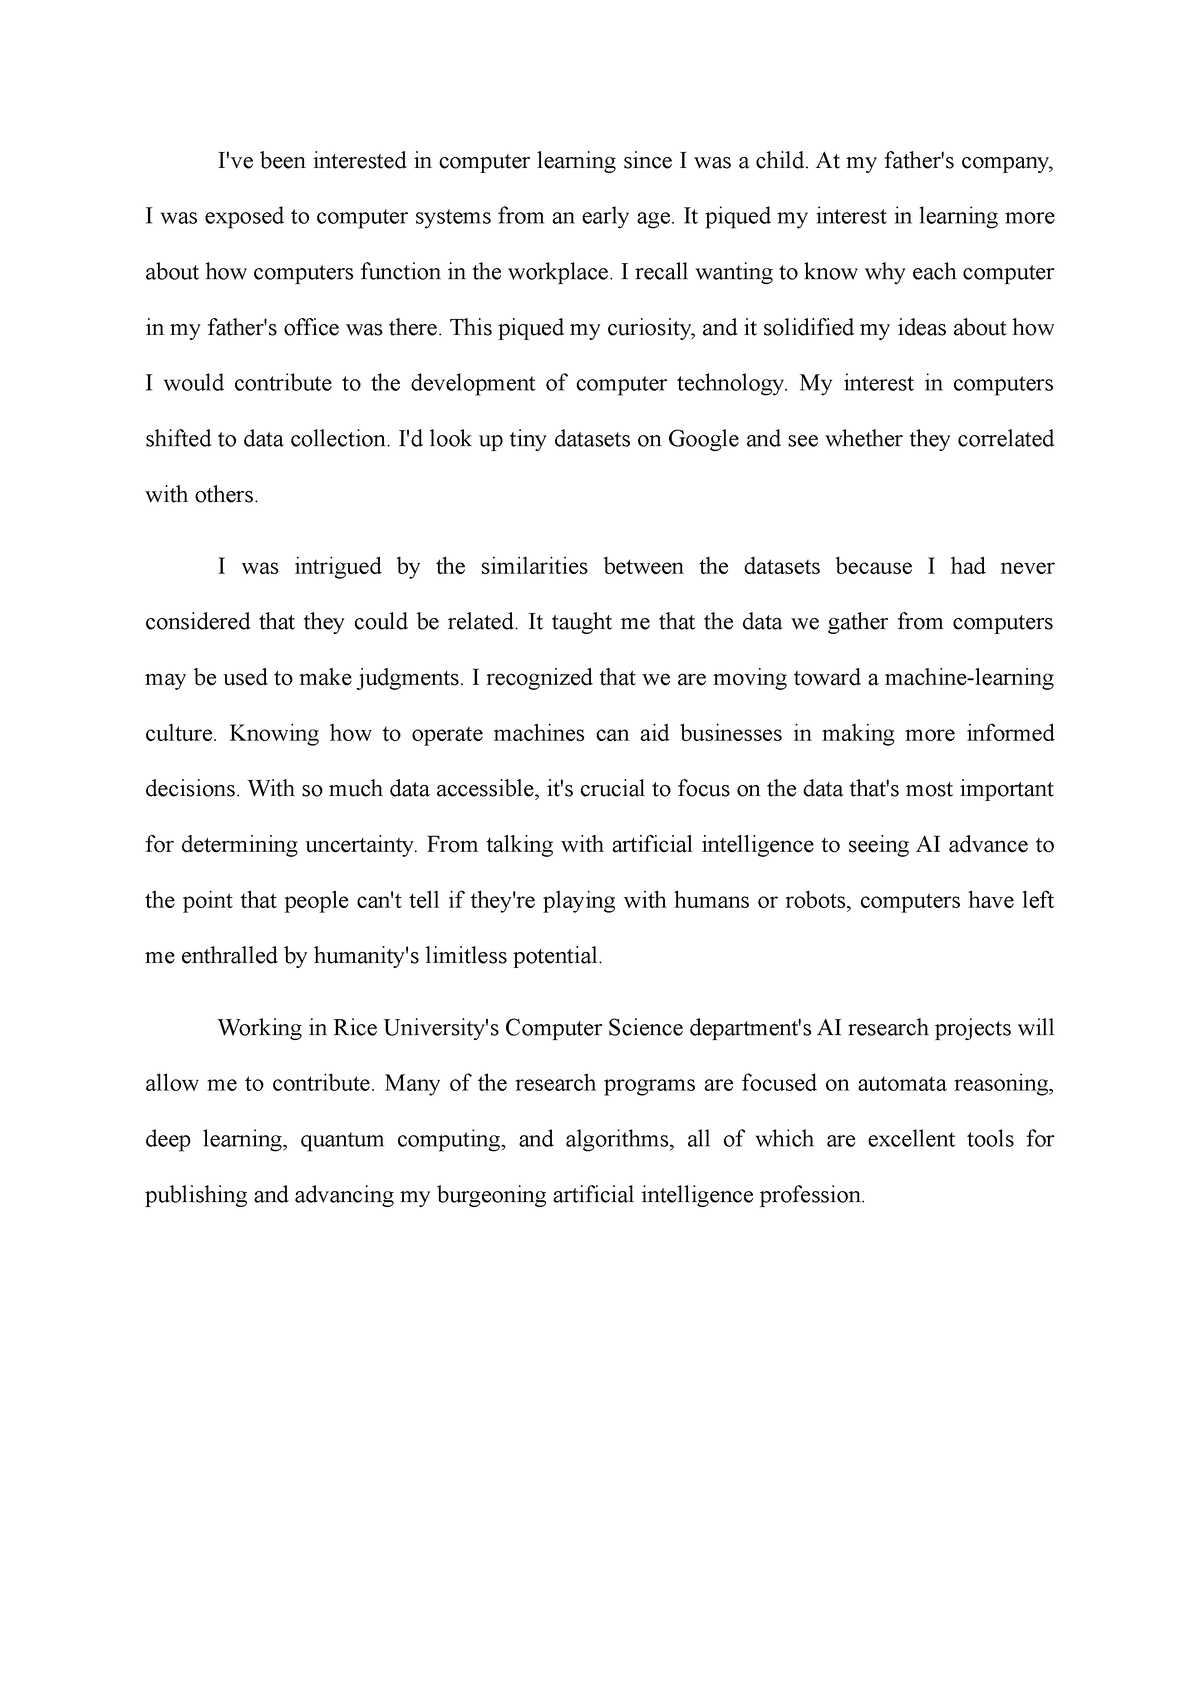 rice university college essay